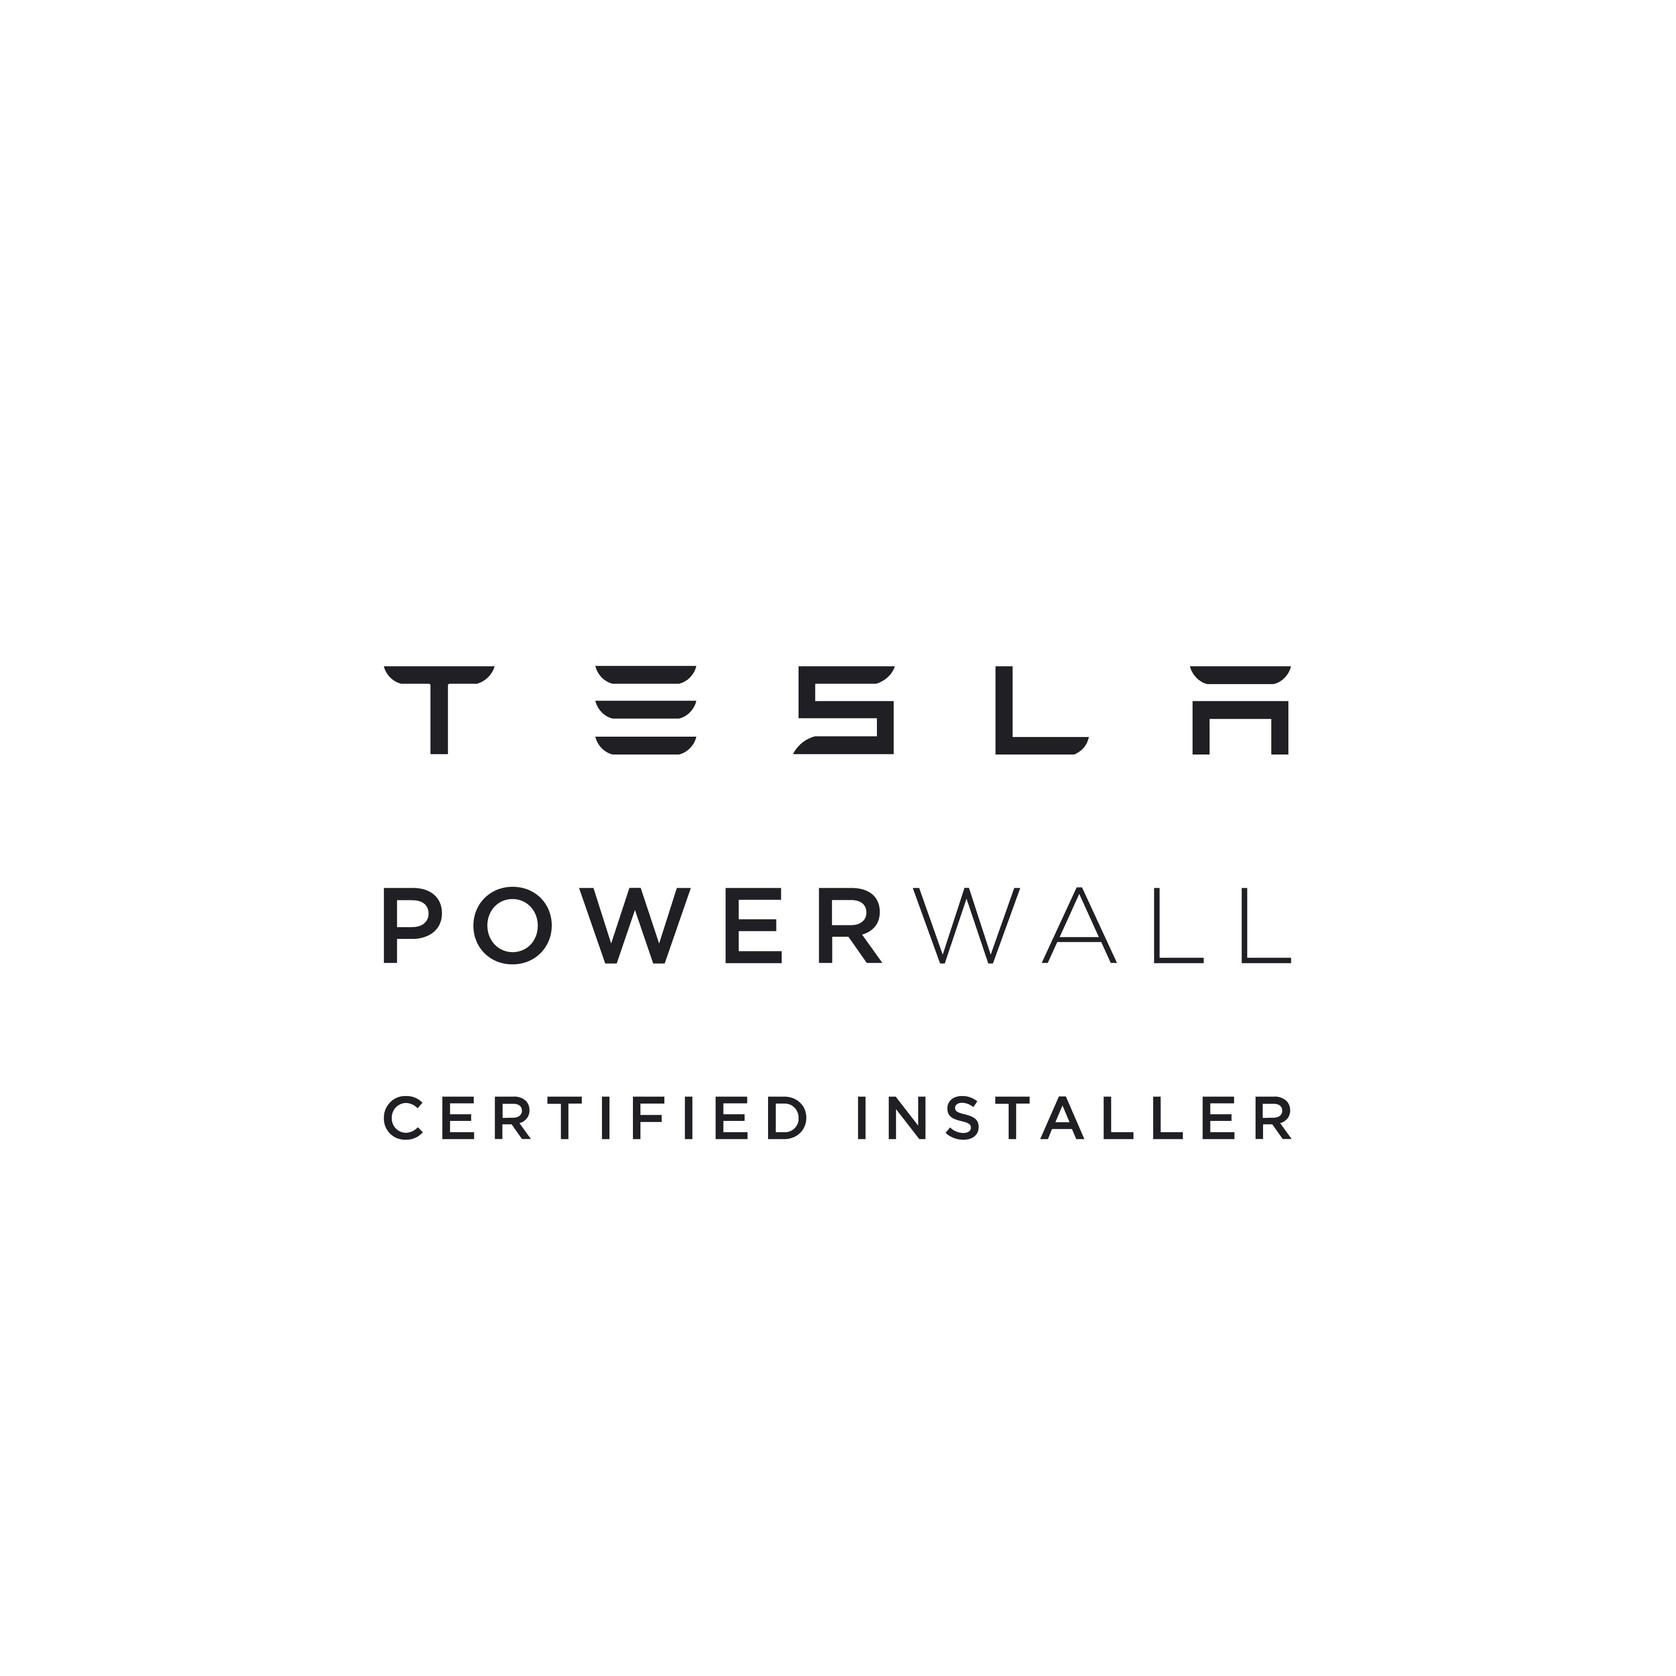 Tesla Powerwall gallery detail image